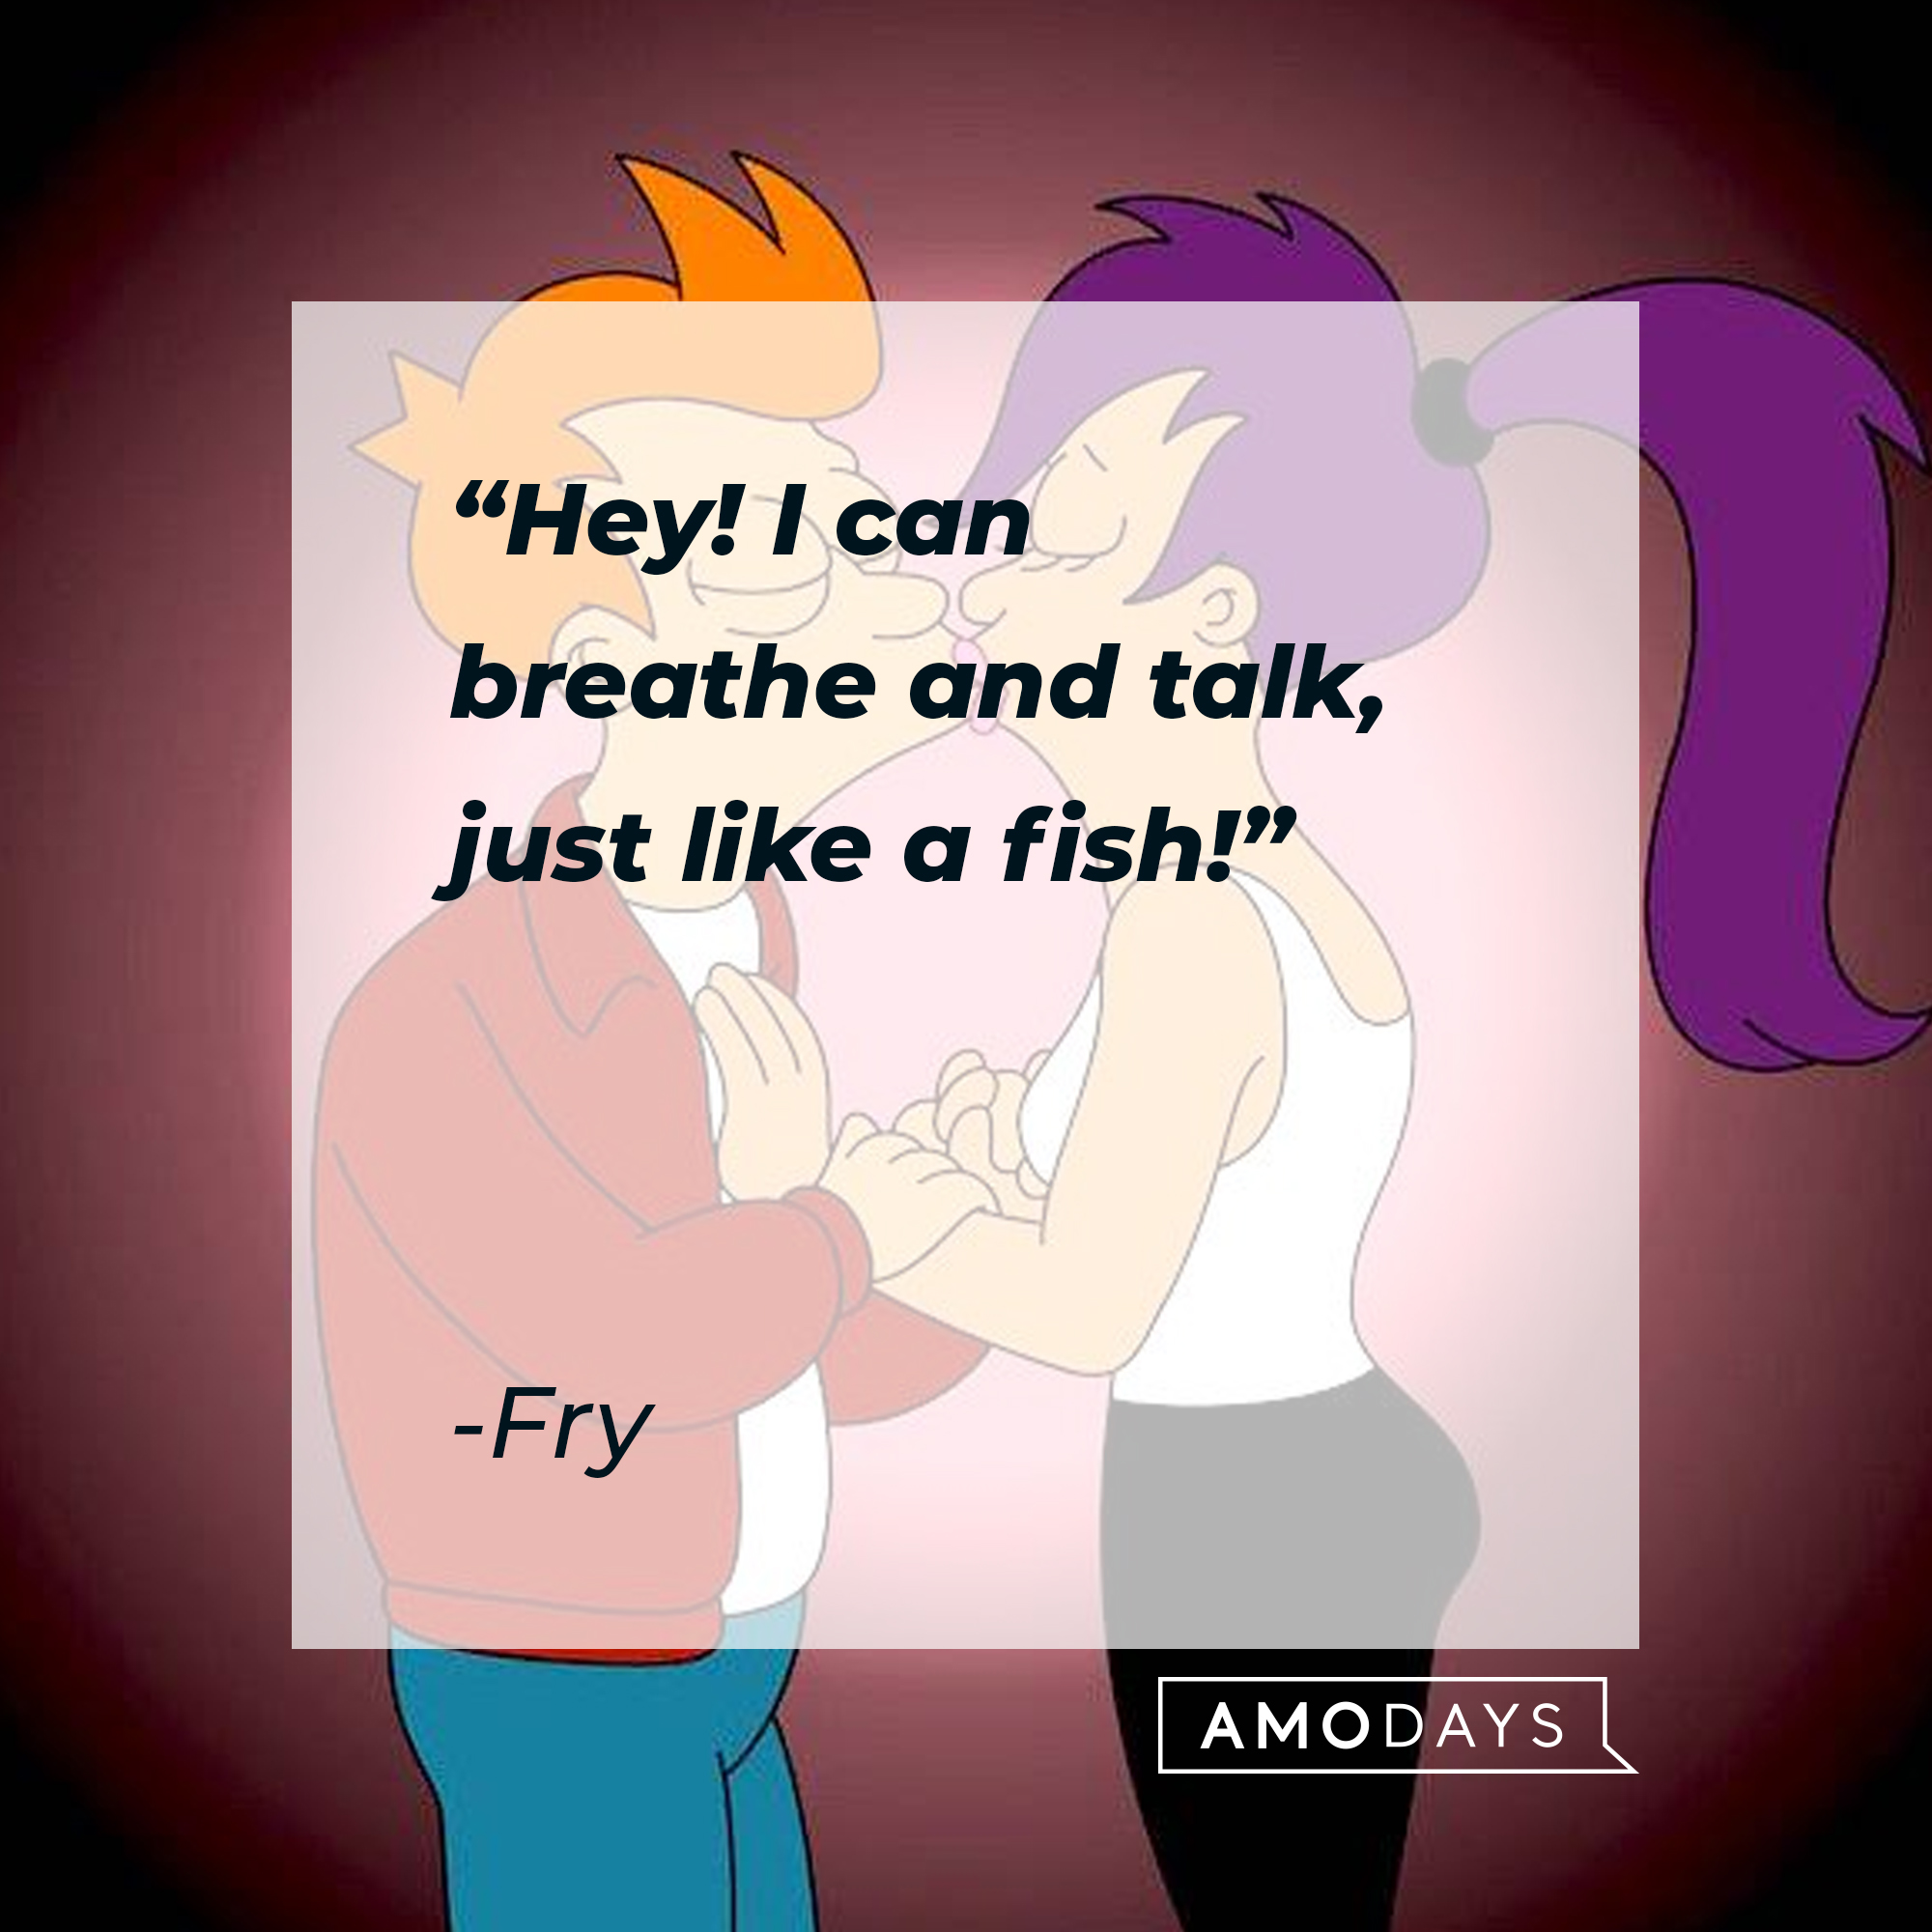 Fry Futurama's quote: "Hey! I can breathe and talk just like a fish!" | Source: Facebook.com/Futurama